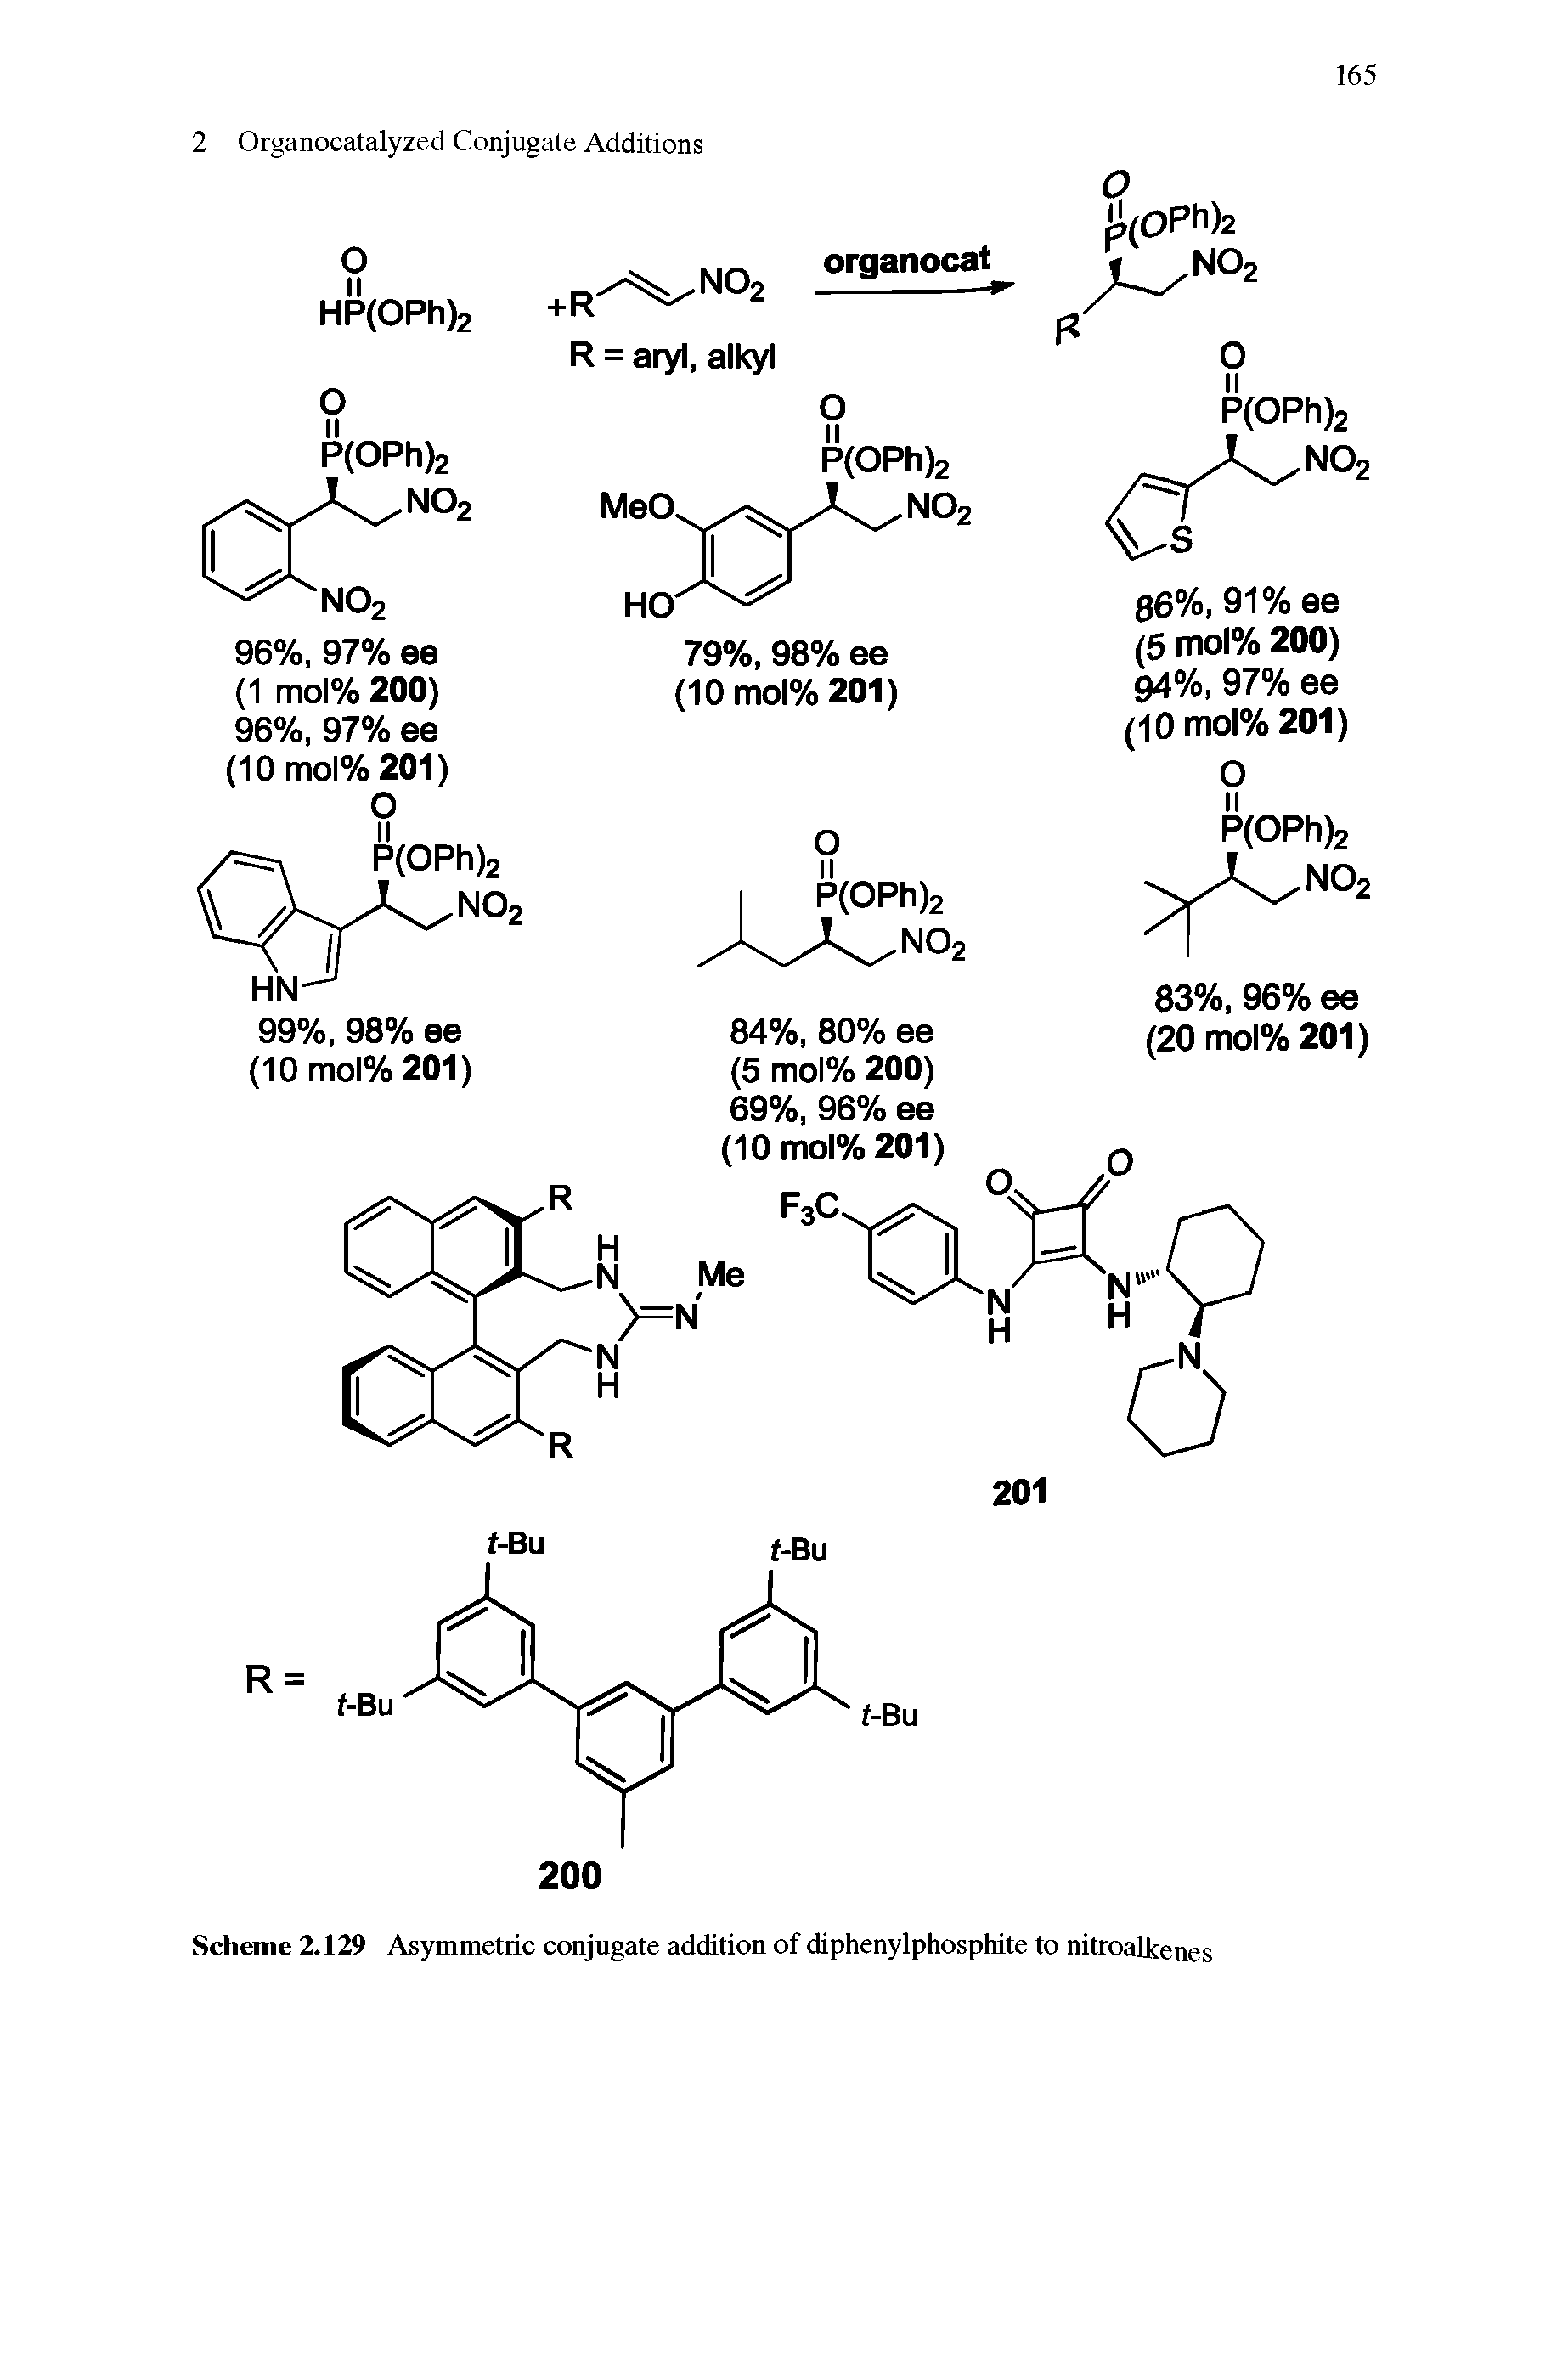 Scheme 2.129 Asymmetric conjugate addition of diphenylphosphite to nitroalkenes...